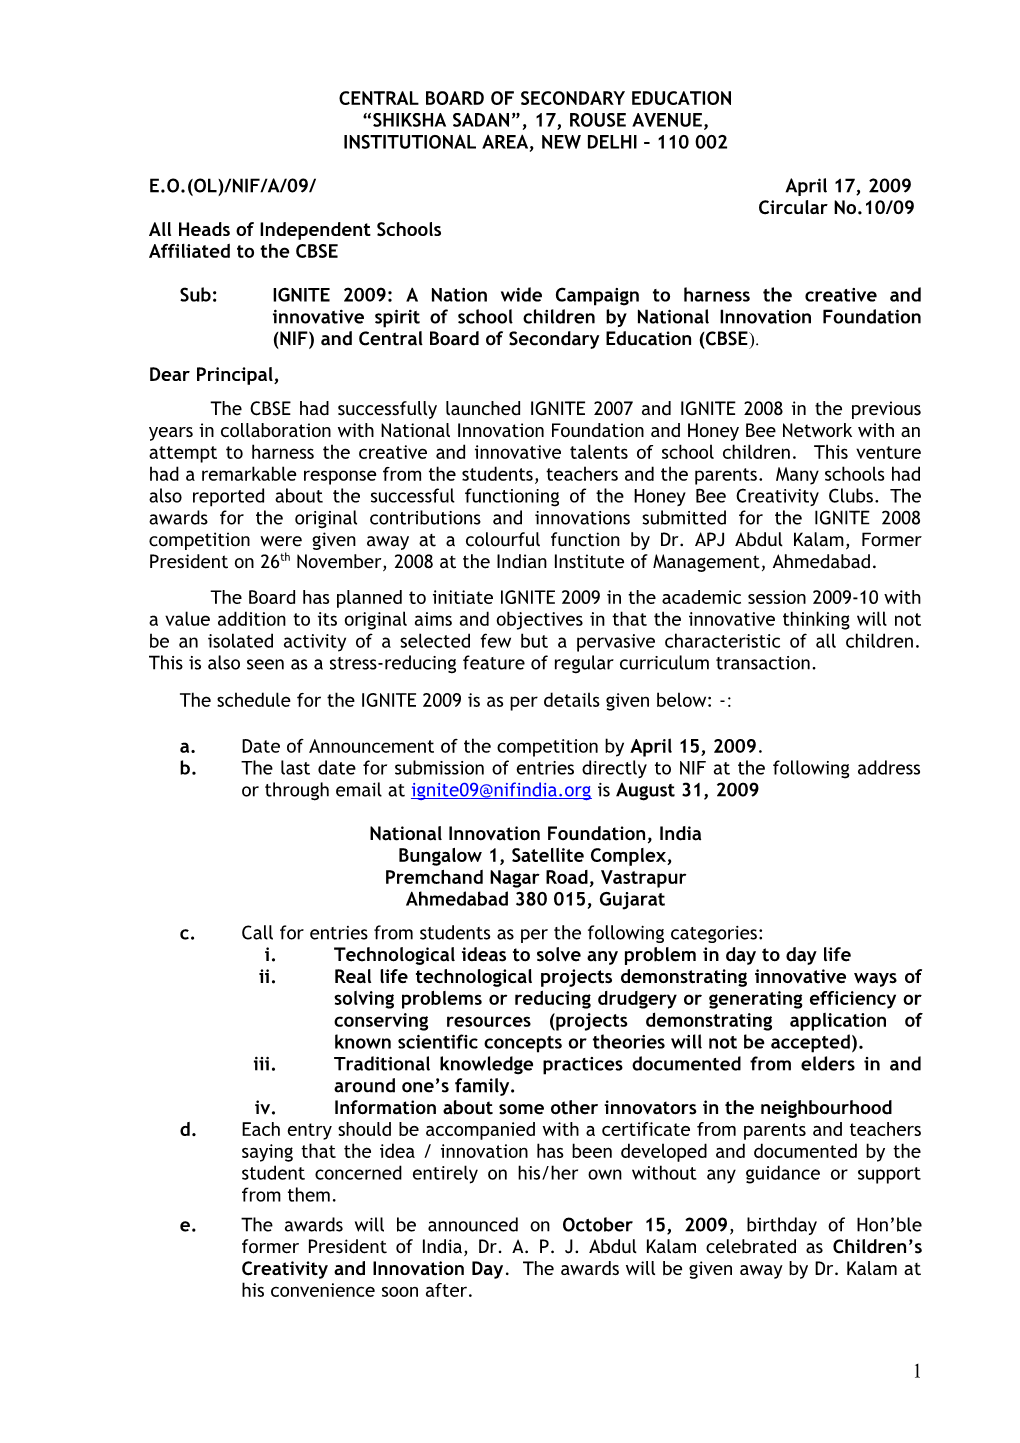 Draft Letter to CBSE Schools/Navodaya Vidyalayas Principals from CBSE Chairman